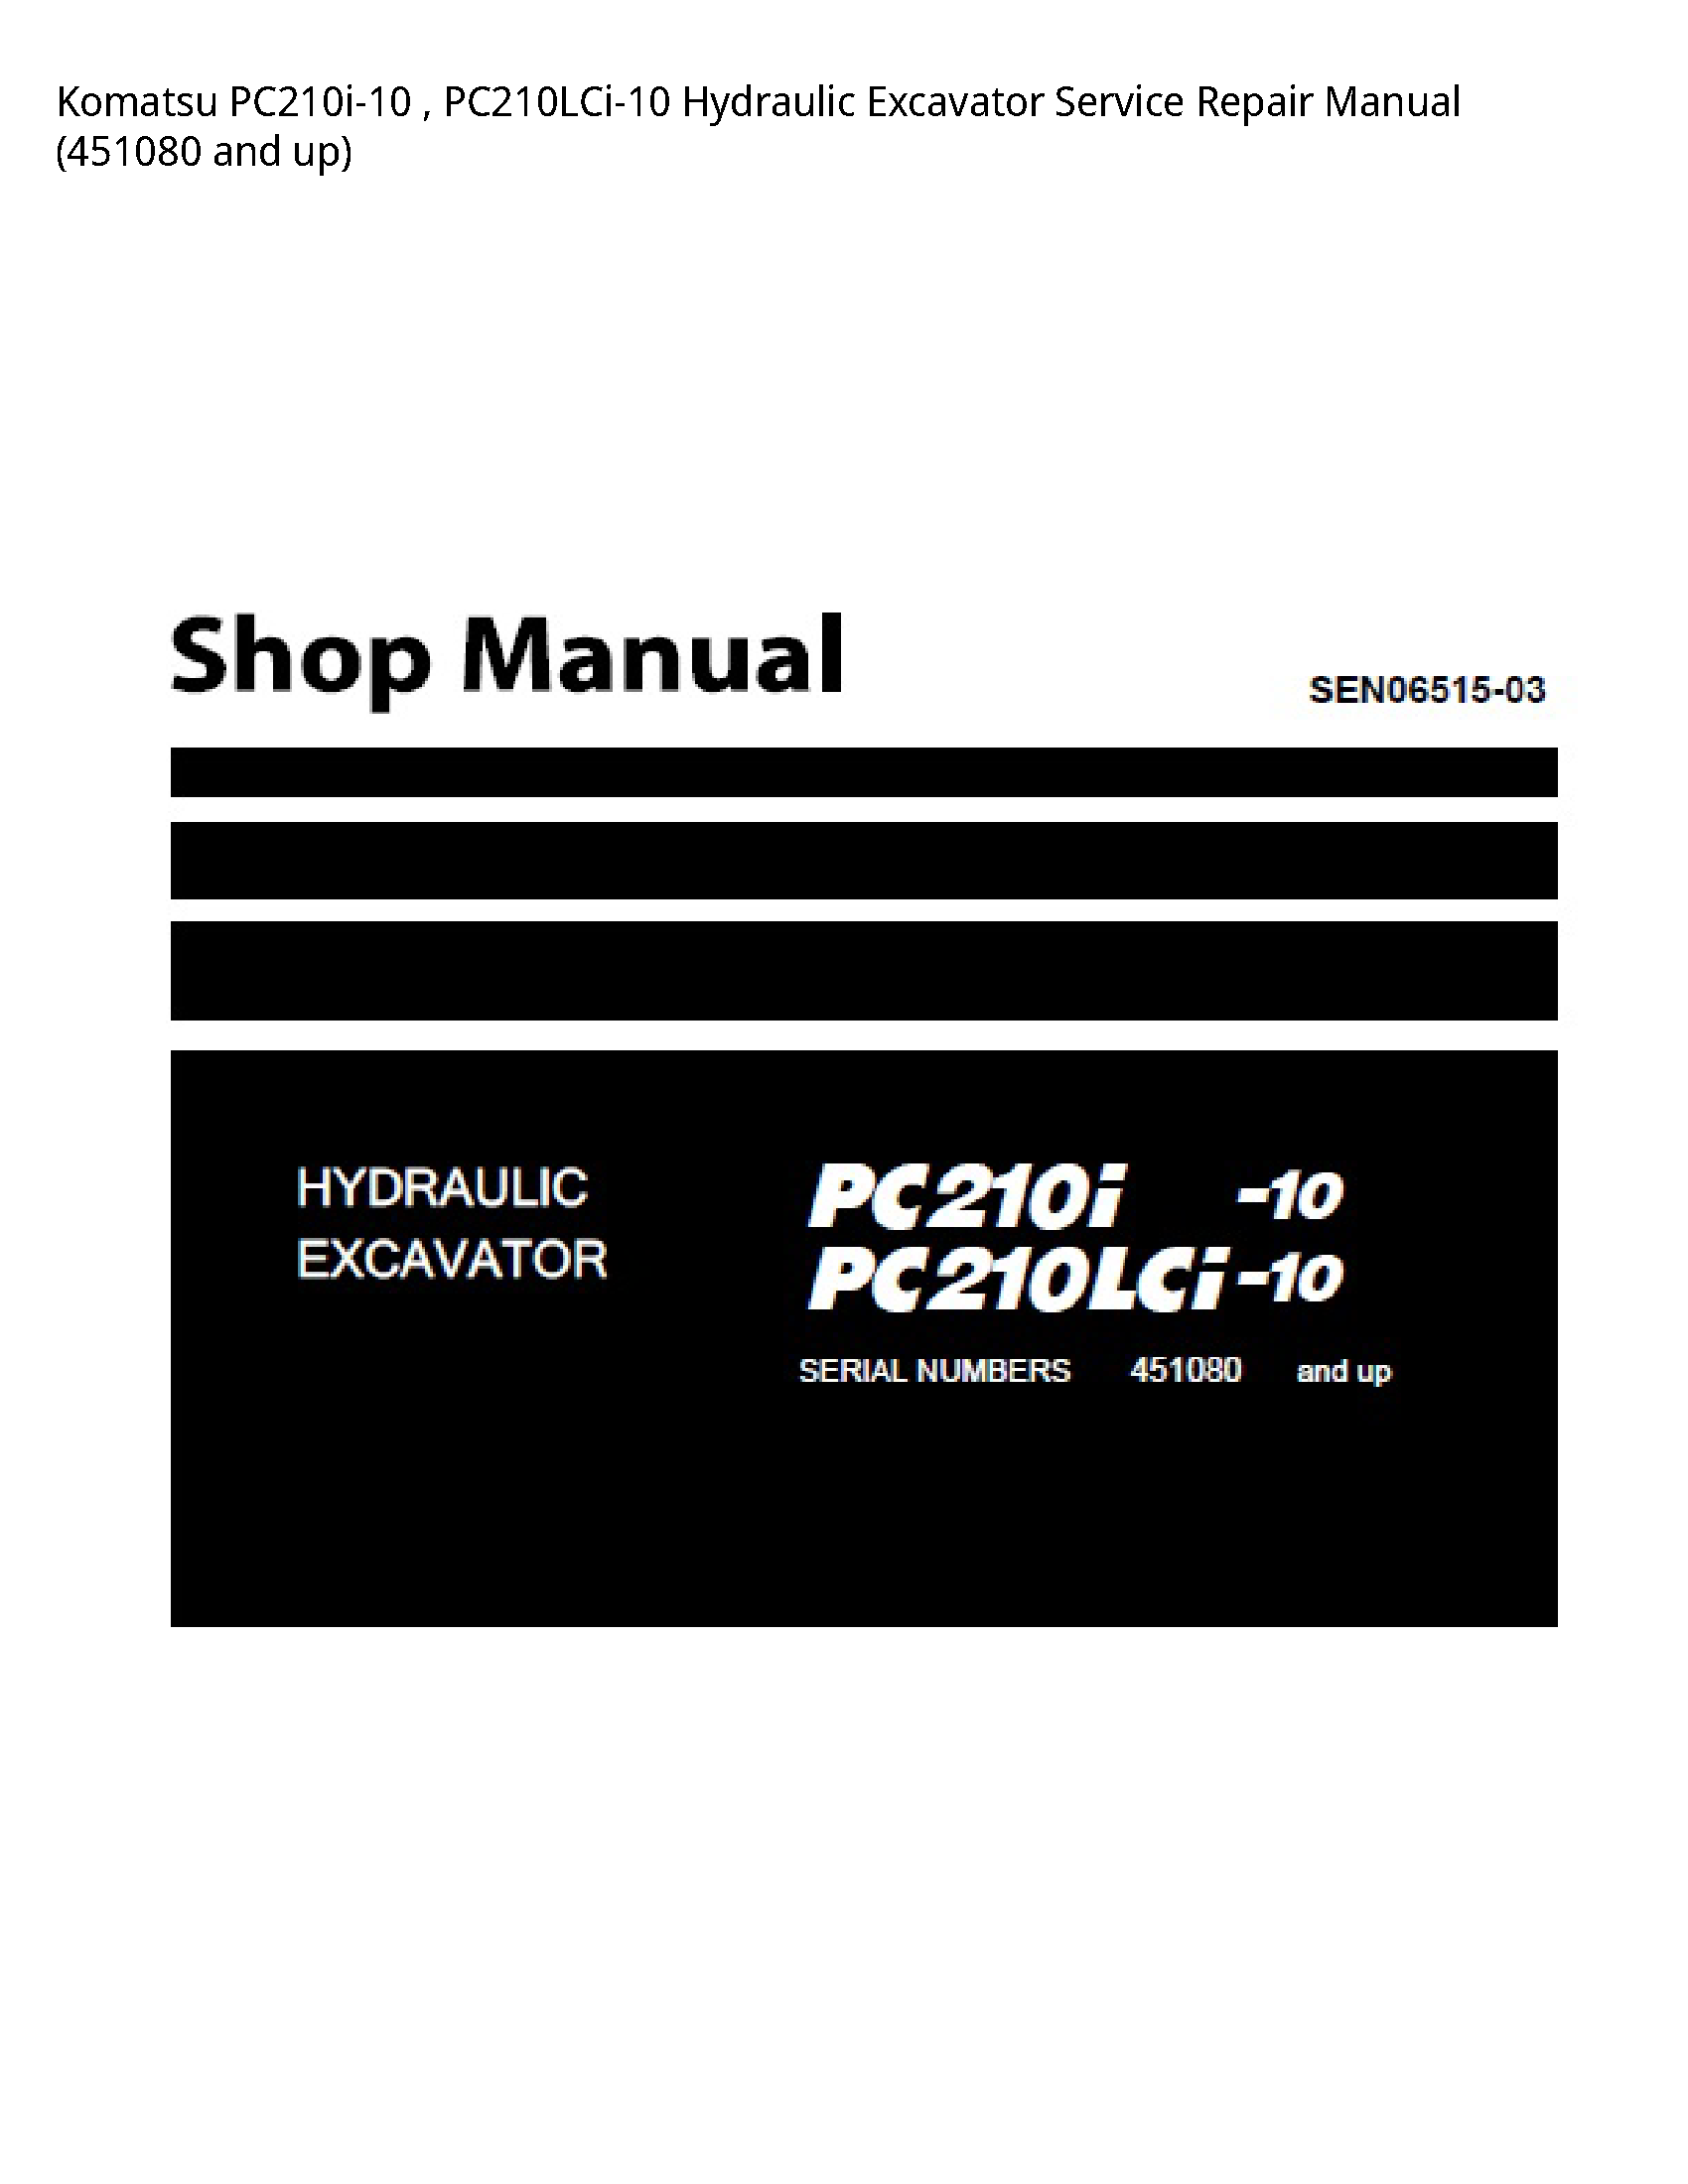 KOMATSU PC210i-10 Hydraulic Excavator manual